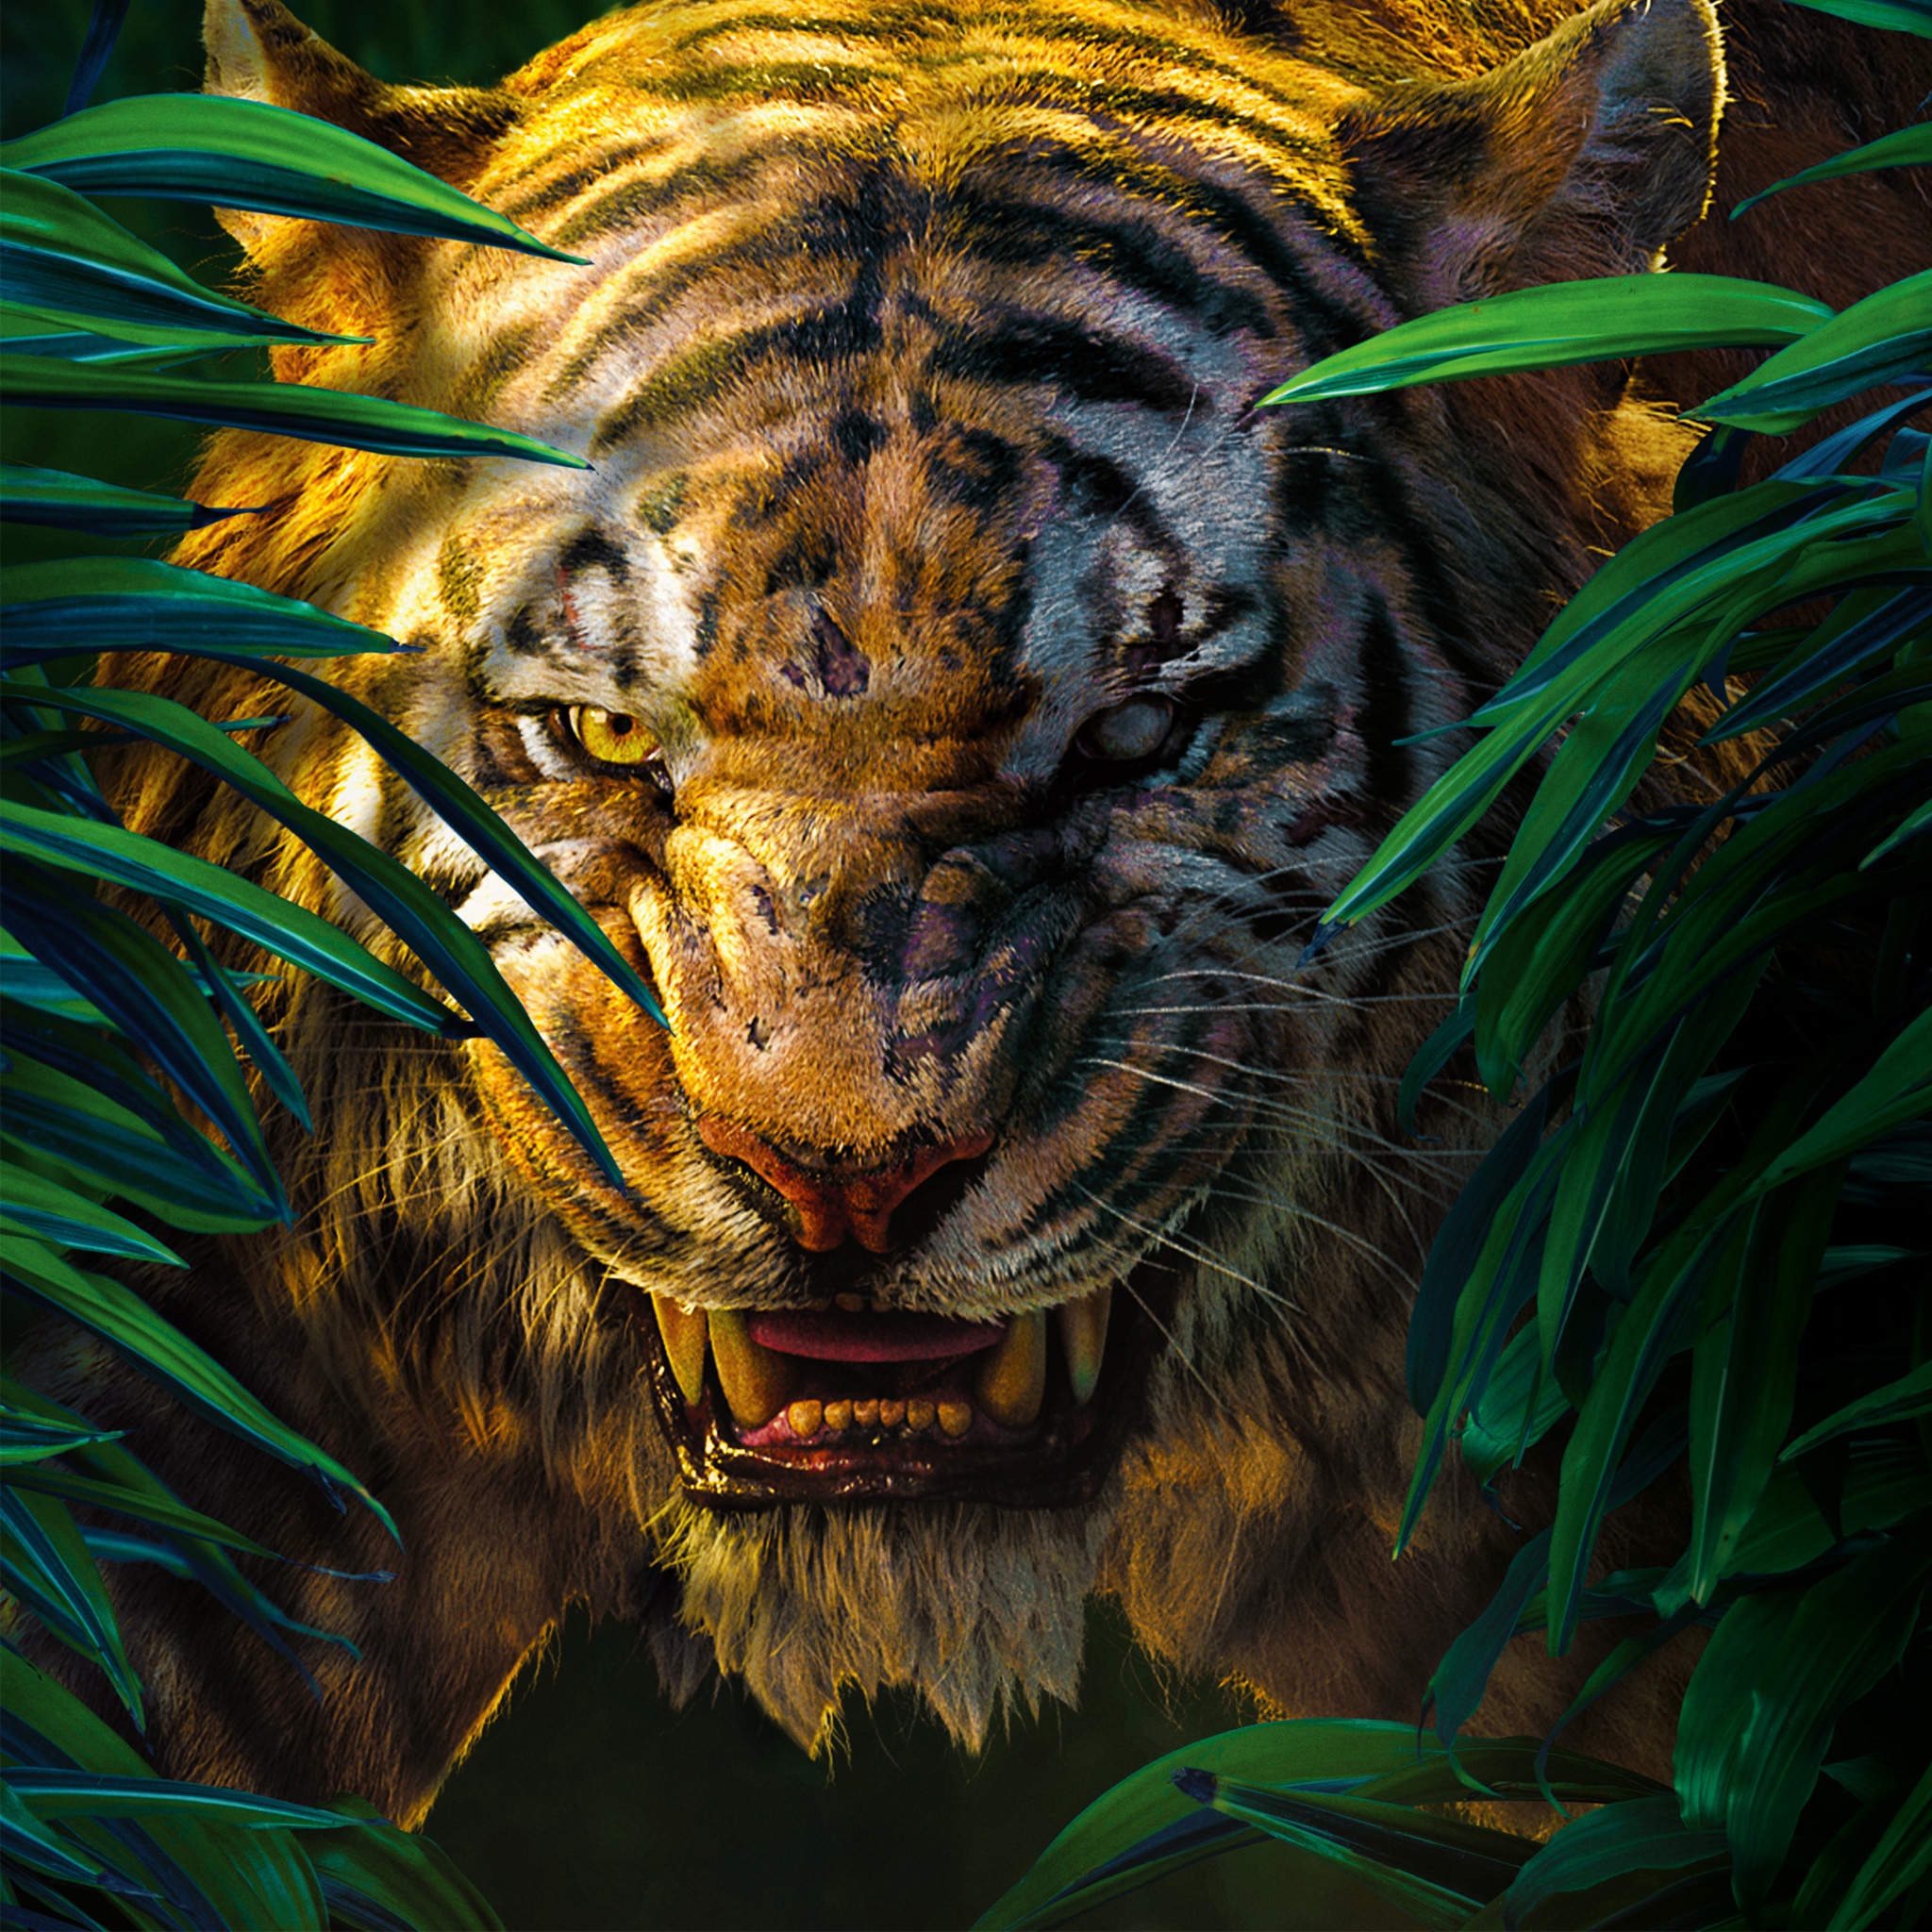 Jungle Book Shere Khan 5K Wallpaper in jpg format for free download